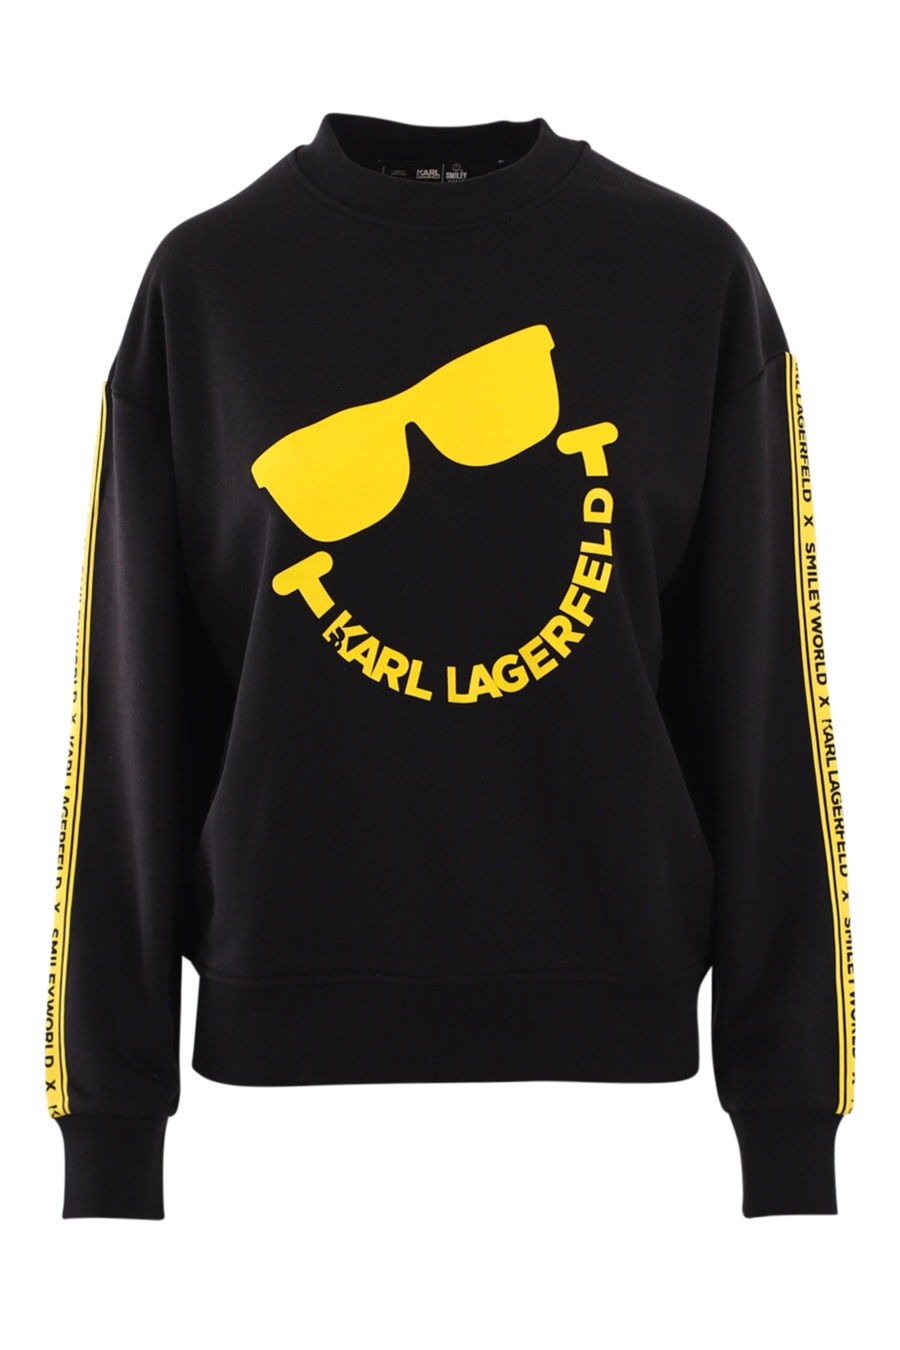 Black unisex sweatshirt with yellow ribbon logo and "smiley" - IMG 0886